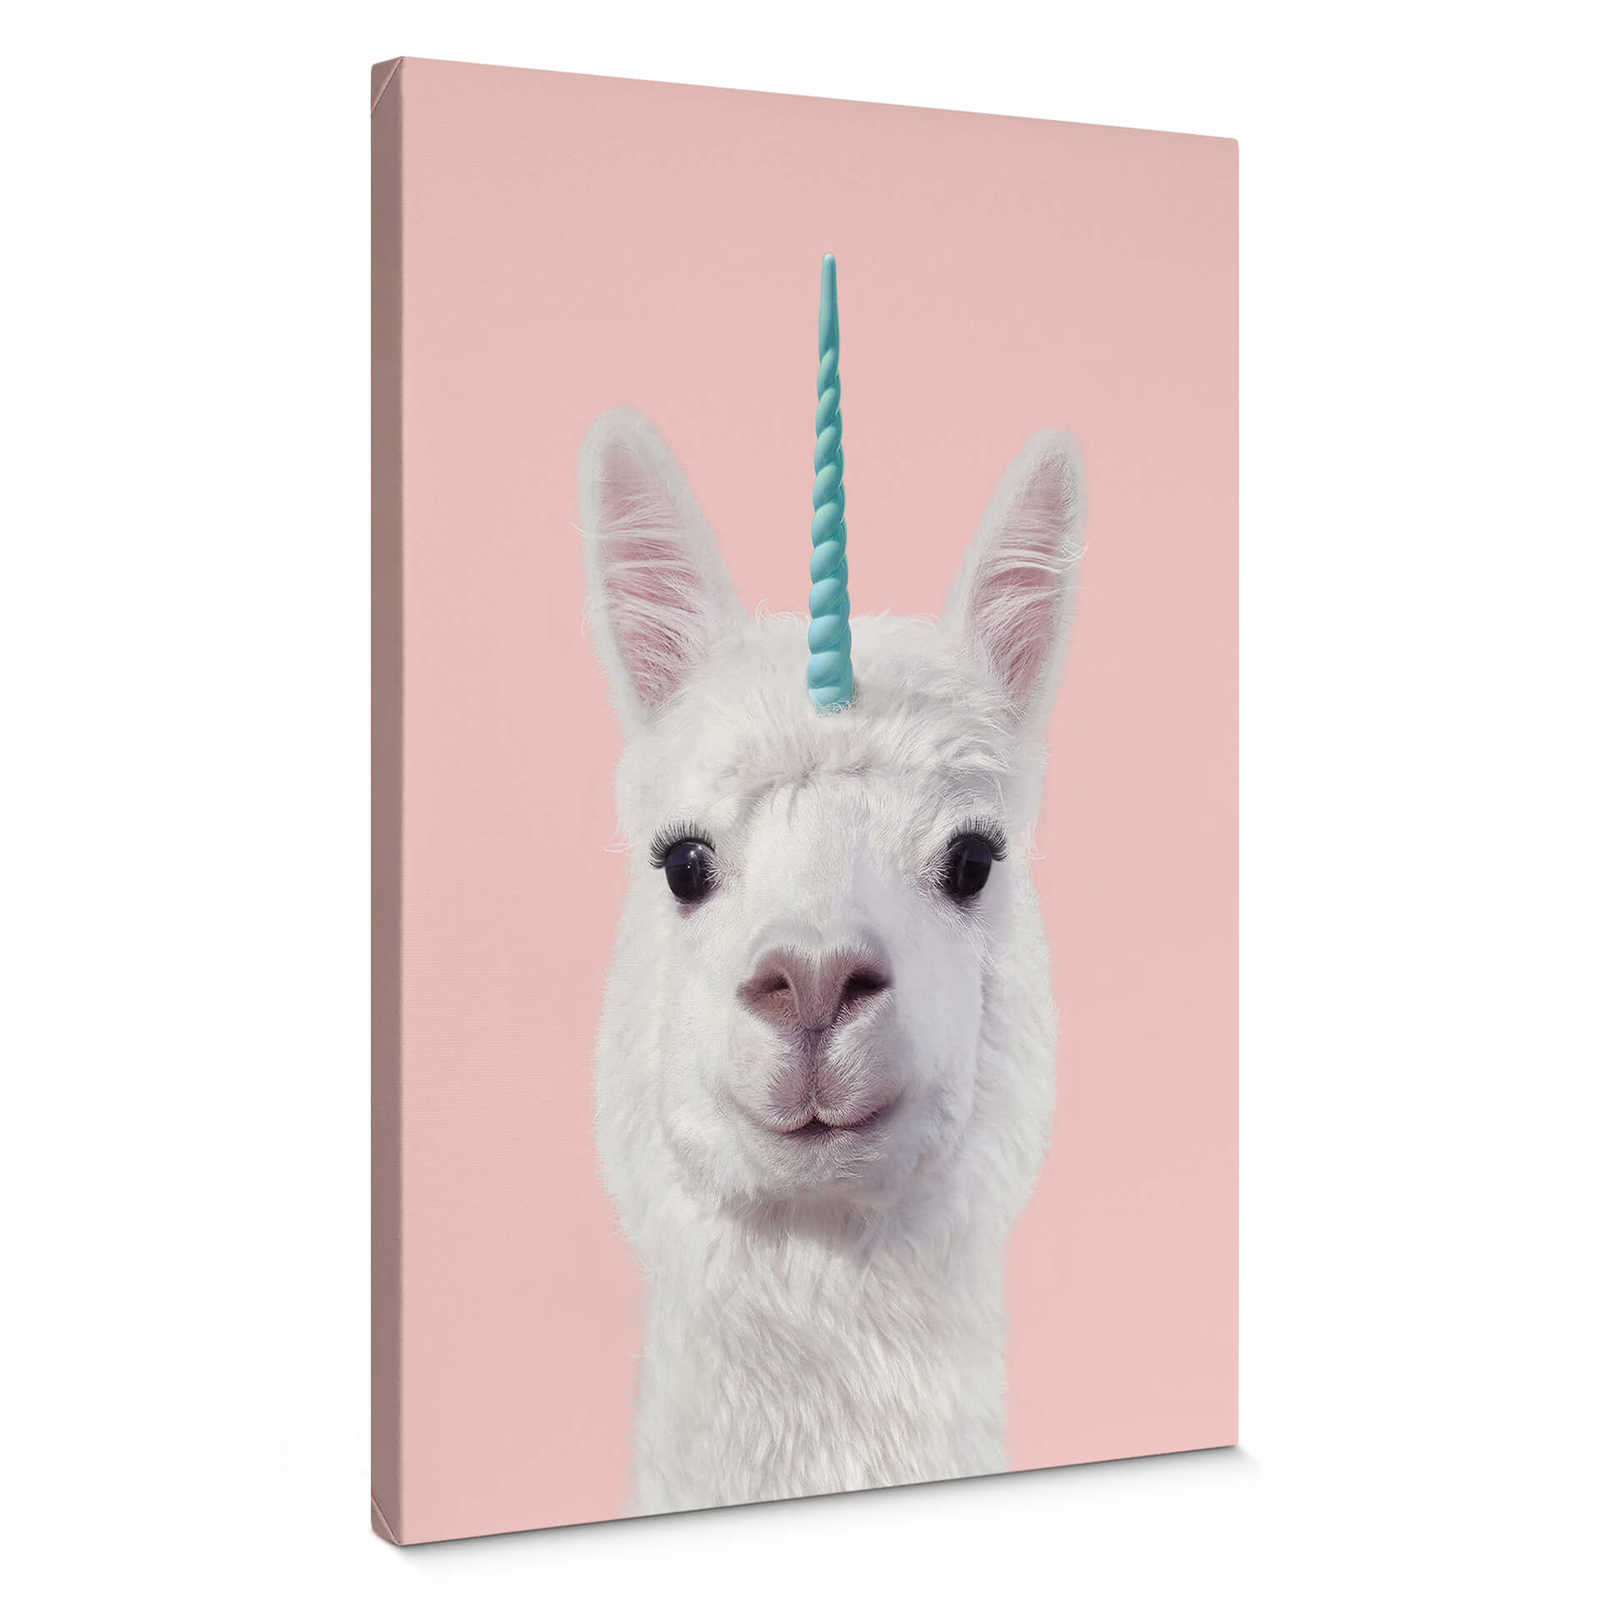         Canvas print alpaca unicorn by Fuentes – pink, white
    